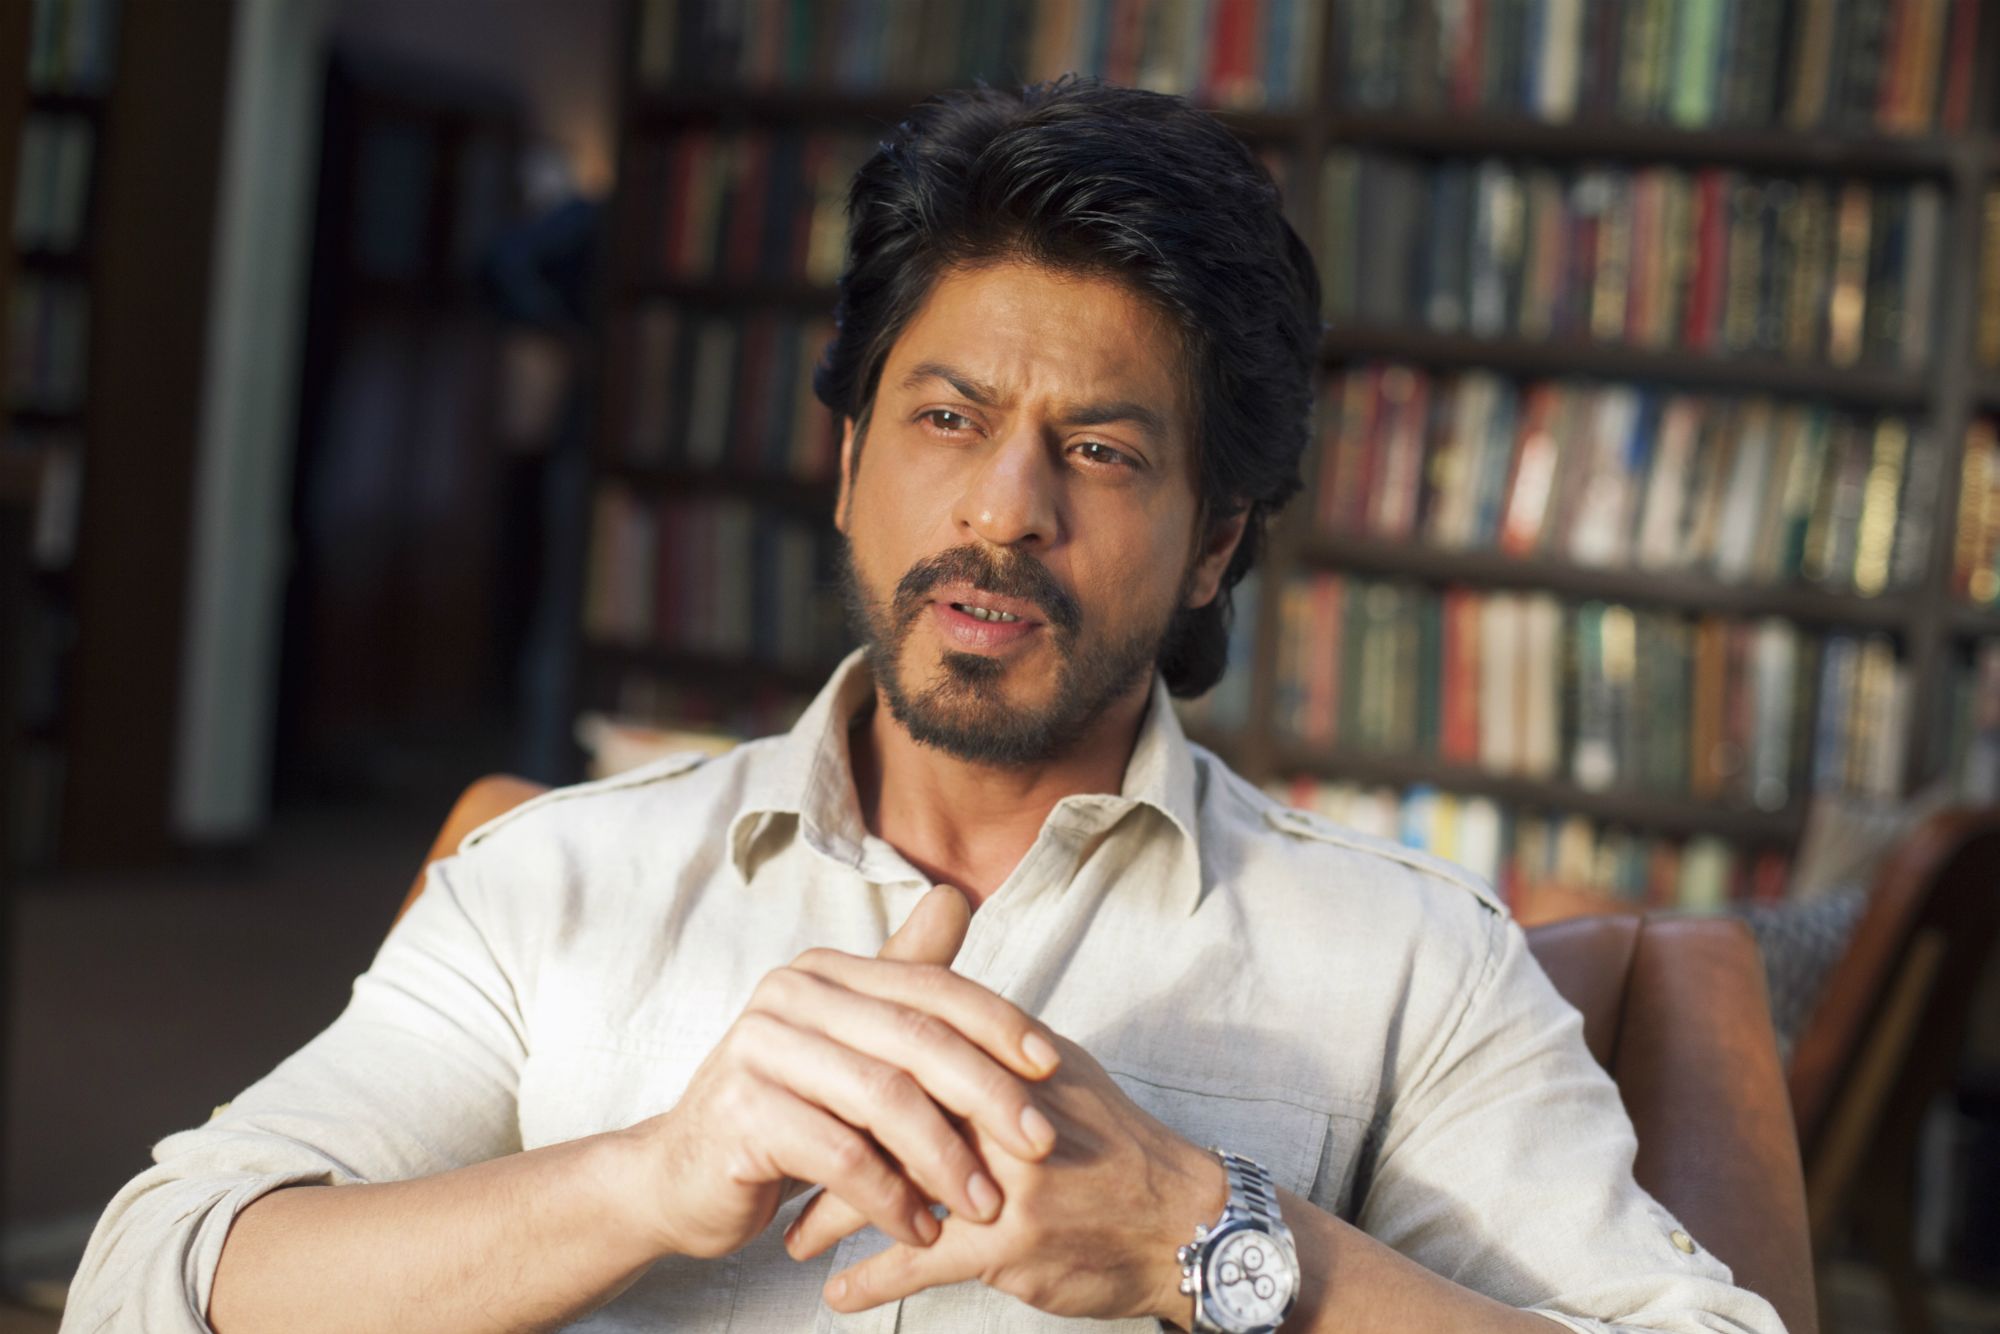 Always felt wasn't cut out to play romantic character, Shah Rukh Khan